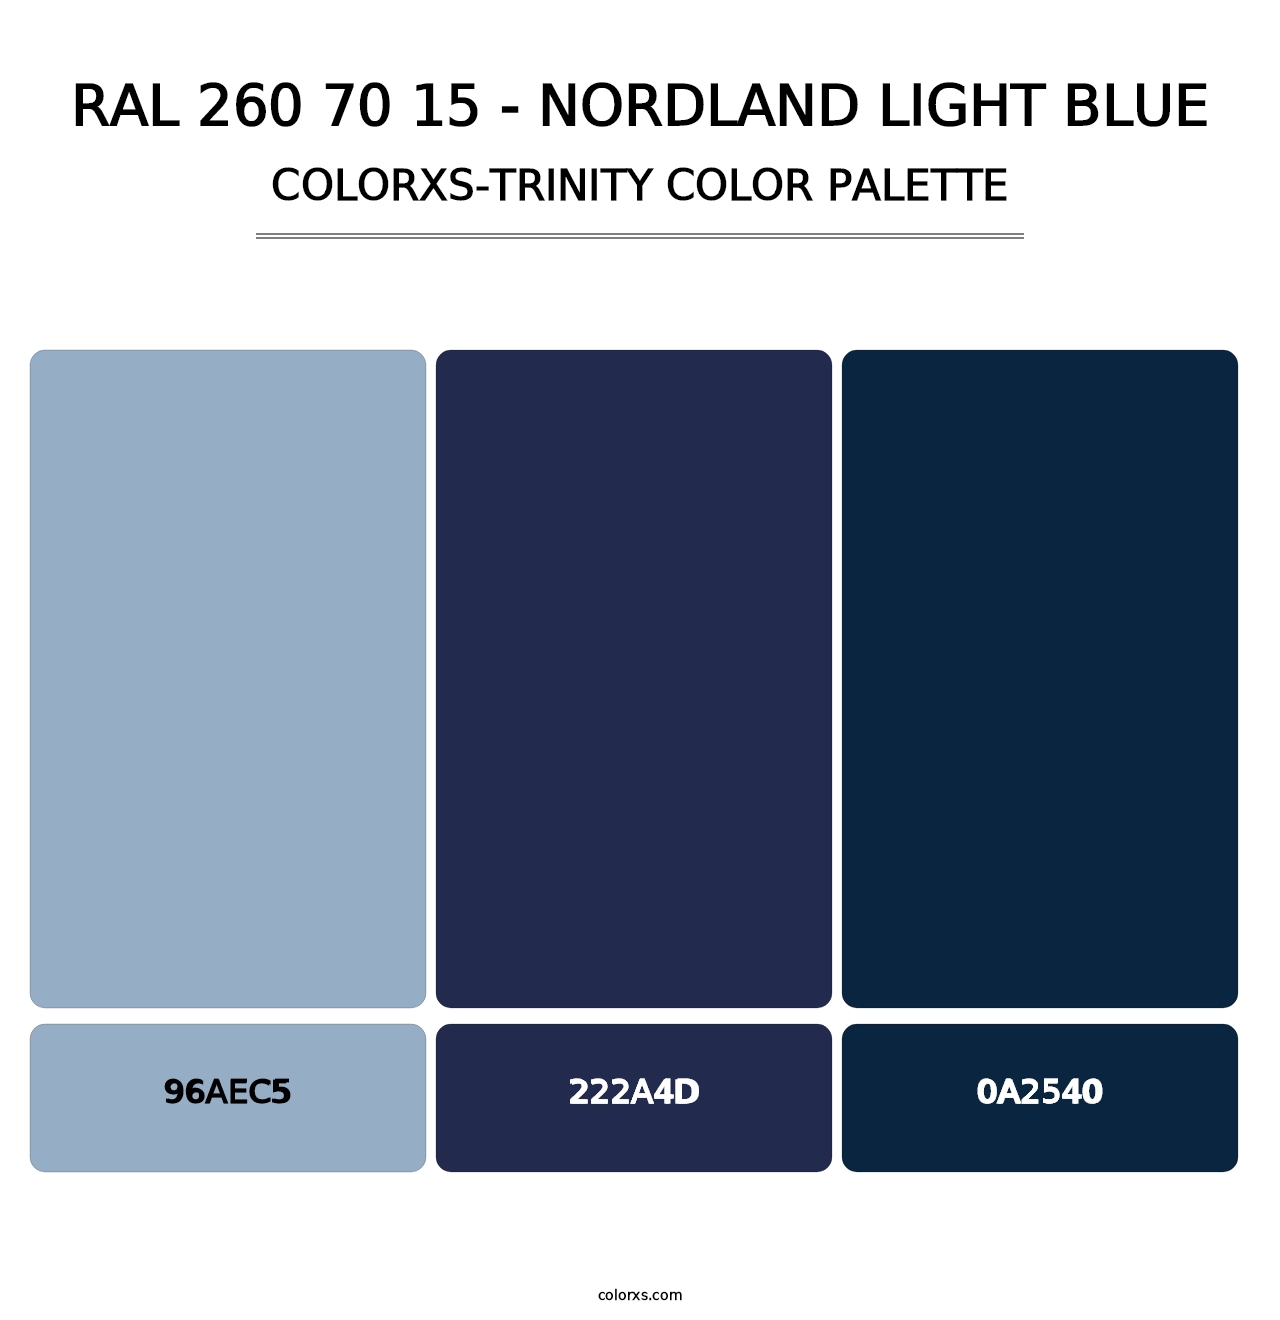 RAL 260 70 15 - Nordland Light Blue - Colorxs Trinity Palette